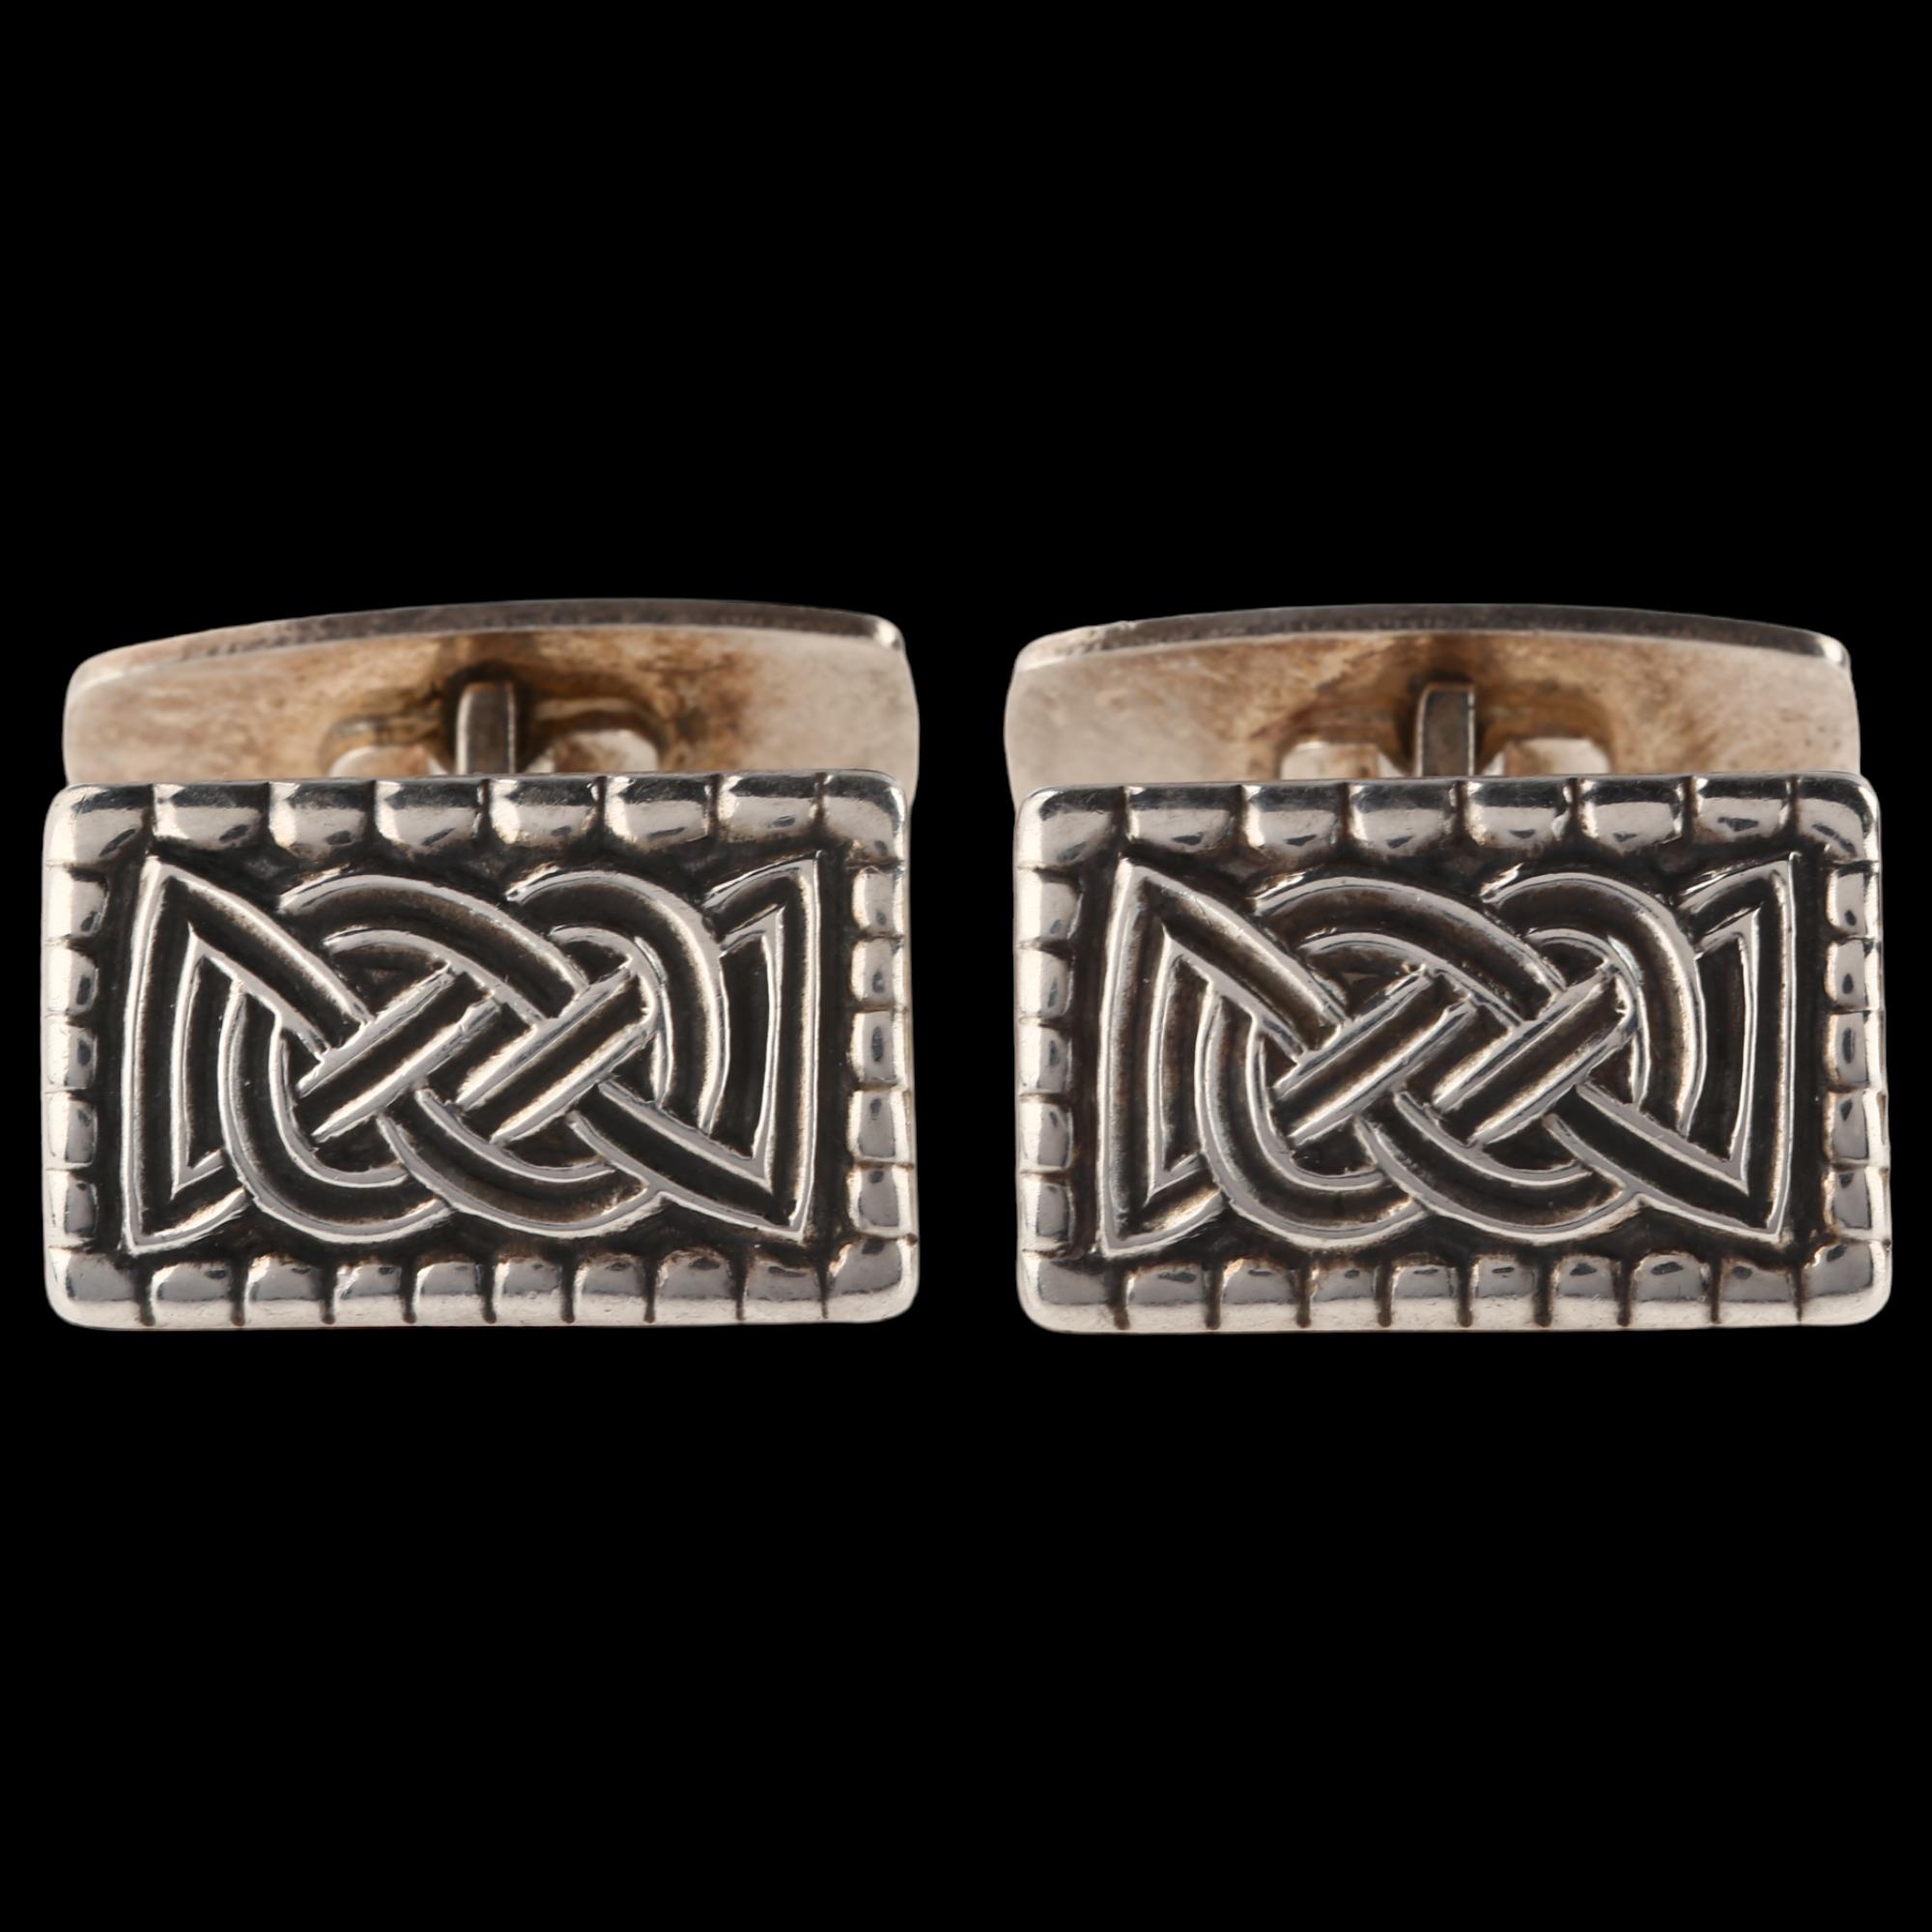 DAVID ANDERSEN - a pair of Danish sterling silver Viking Revival cufflinks, panel length 21mm, 14.4g